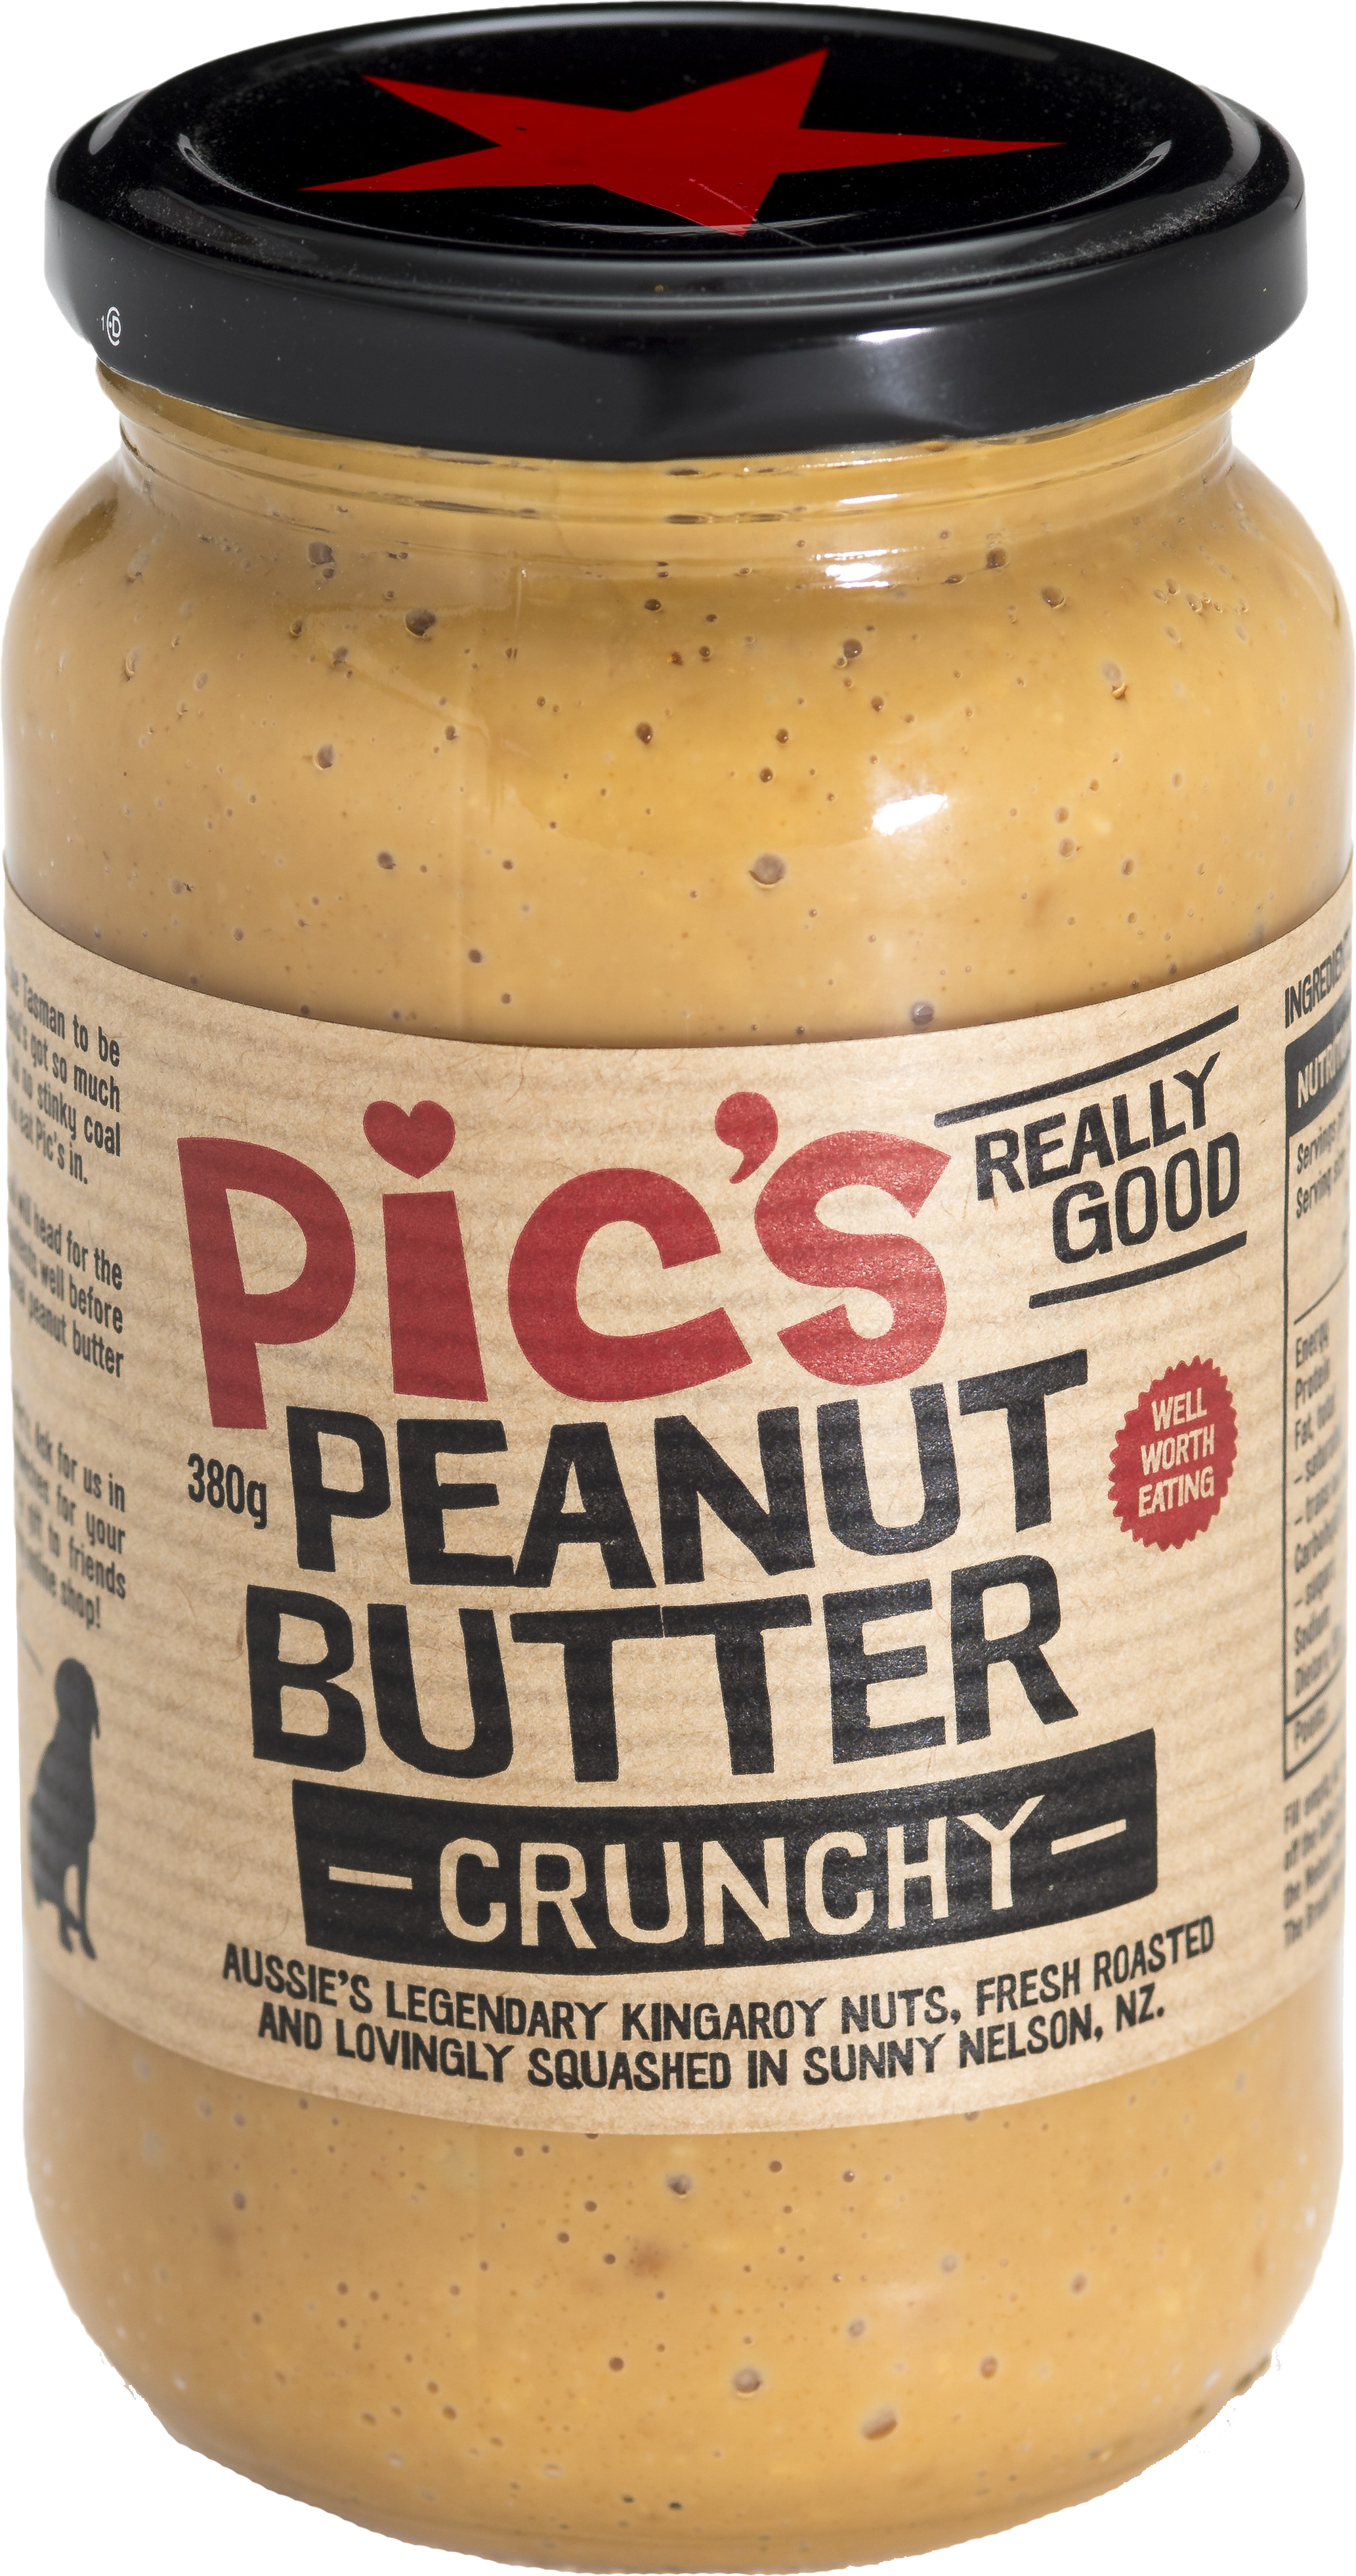 Pics Really Good Peanut Butter Bellingen